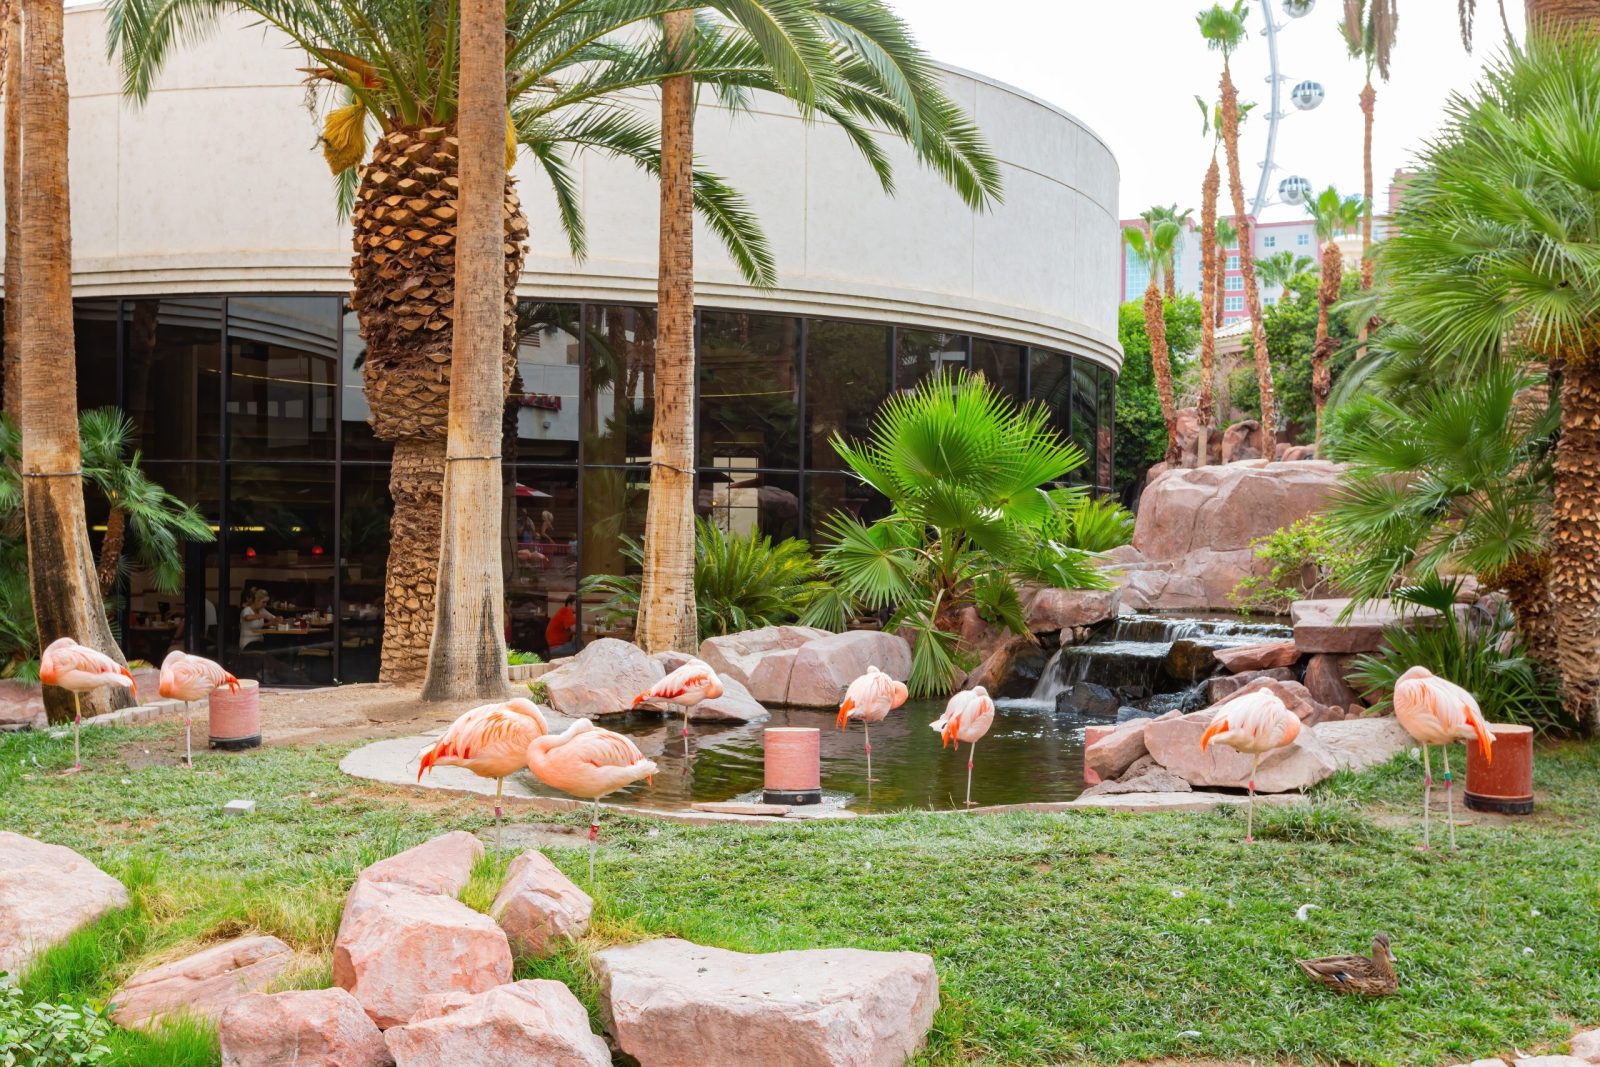 Flamingo resort in Las Vegas